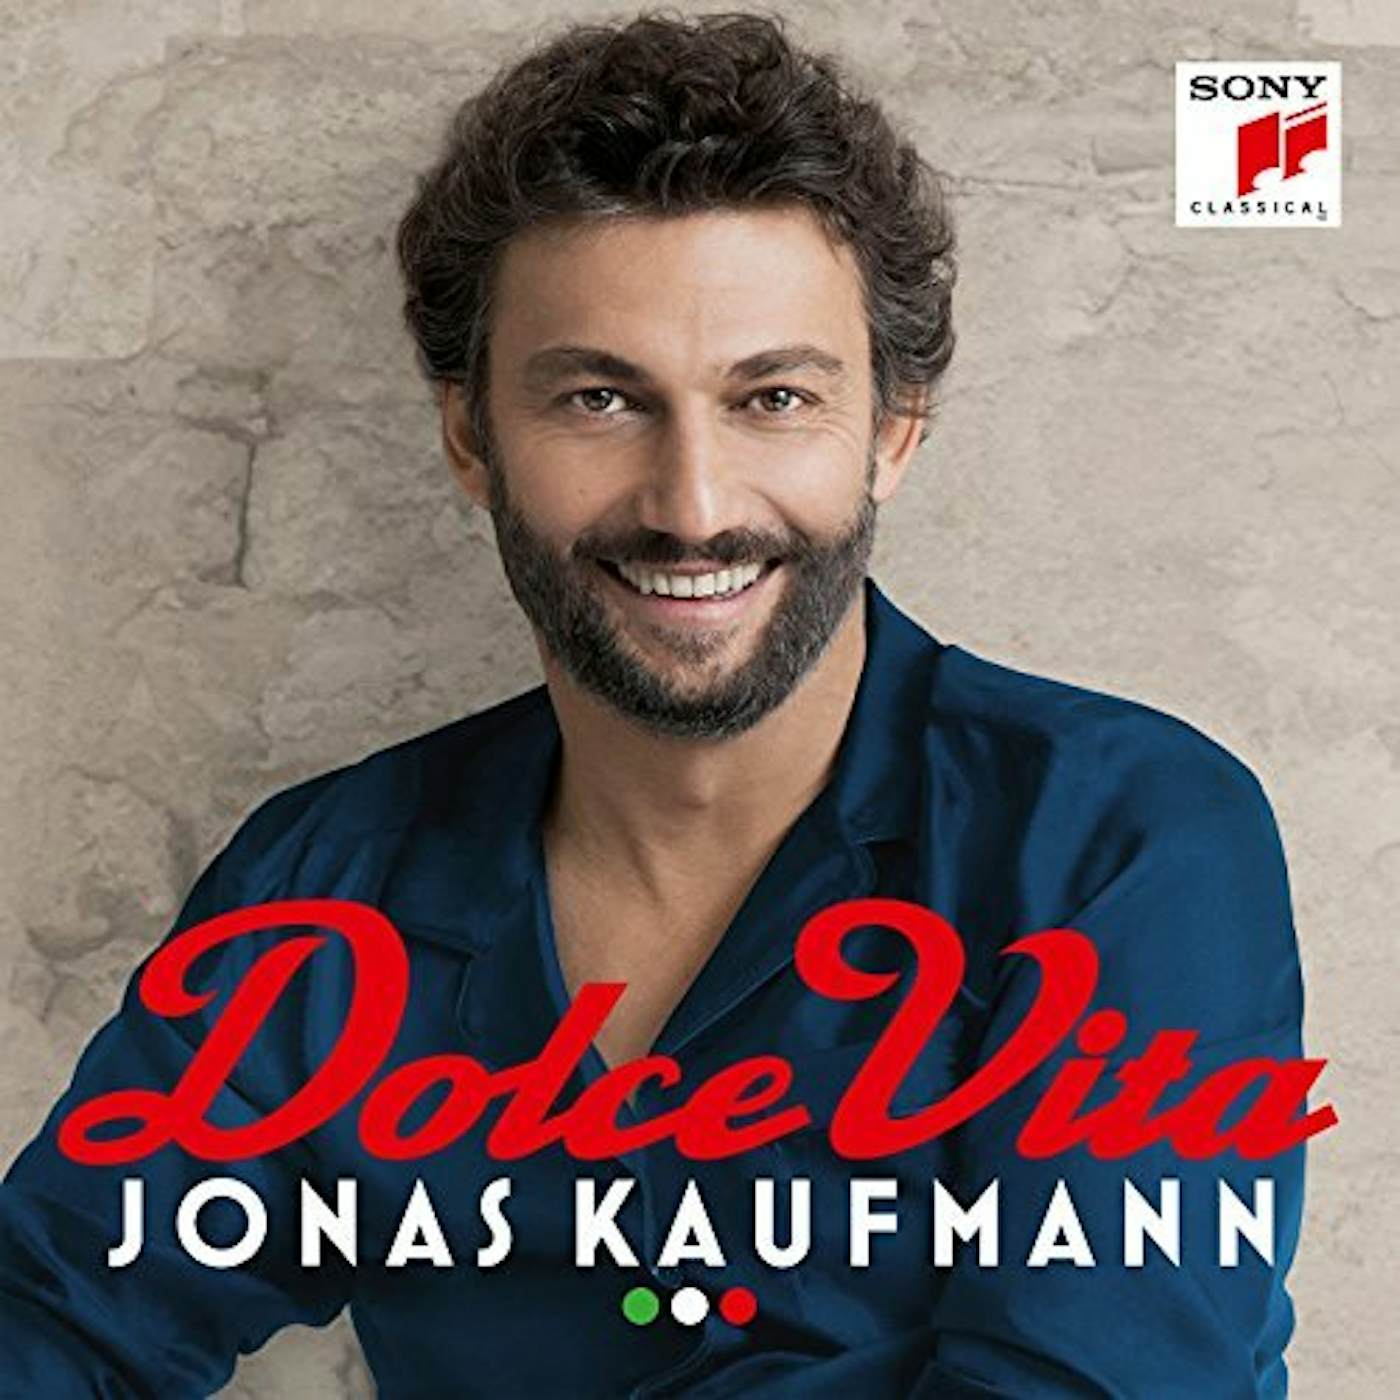 Jonas Kaufmann DOLCE VITA CD